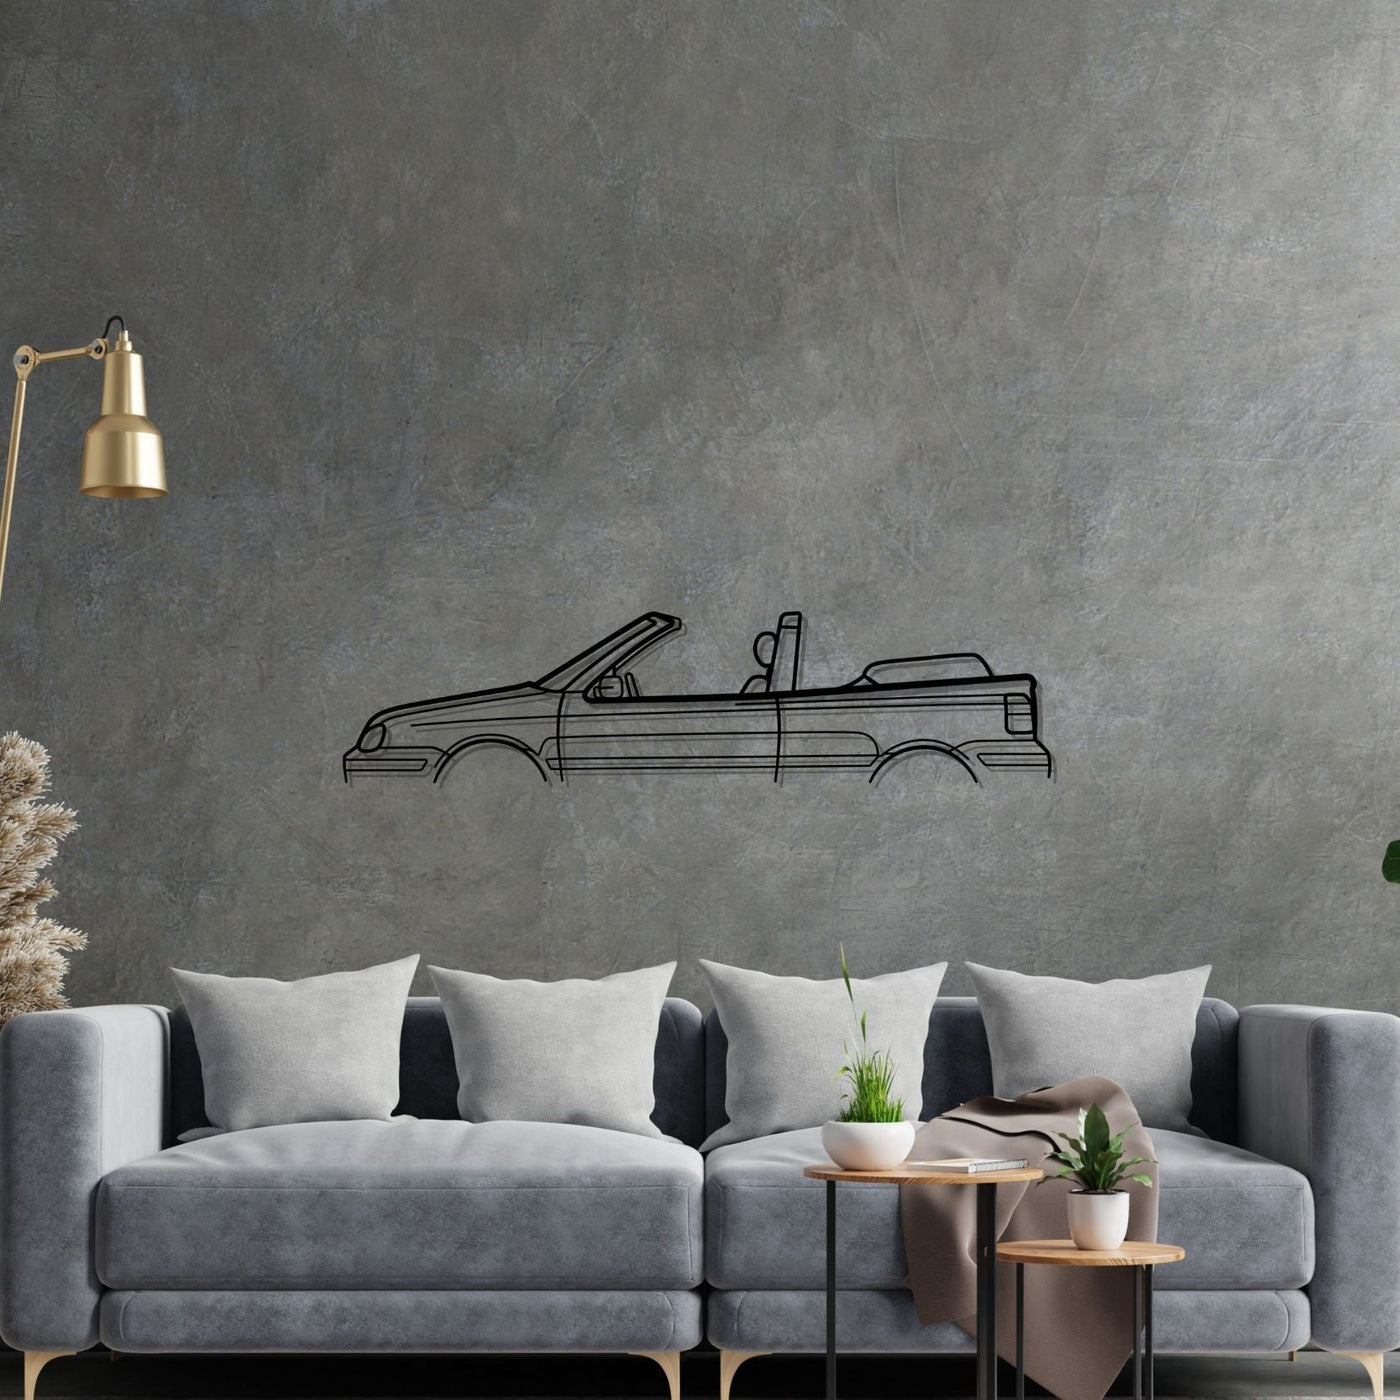 Golf MK4 Cabrio Classic Silhouette Metal Wall Art